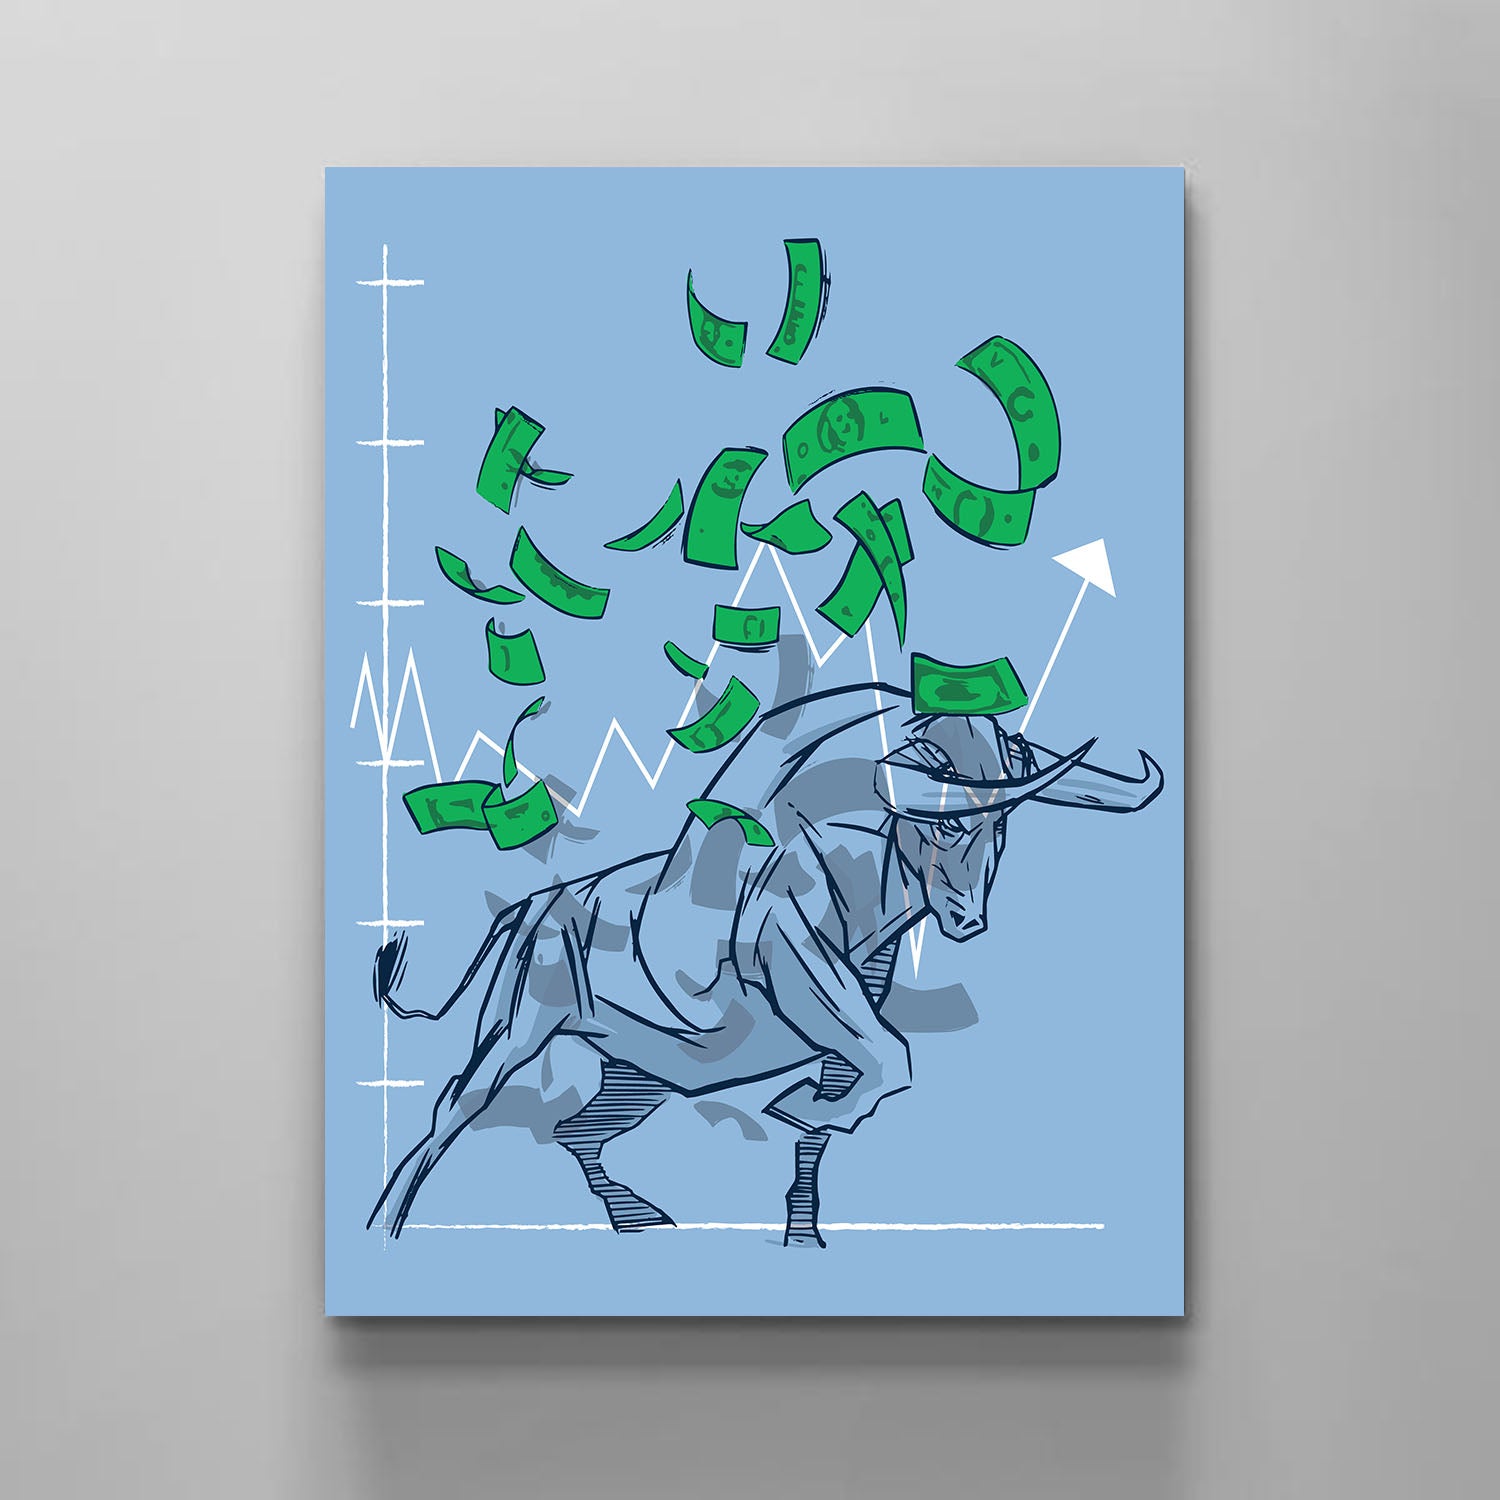 The Market Money - Stock Buddies -Canvas Wraps